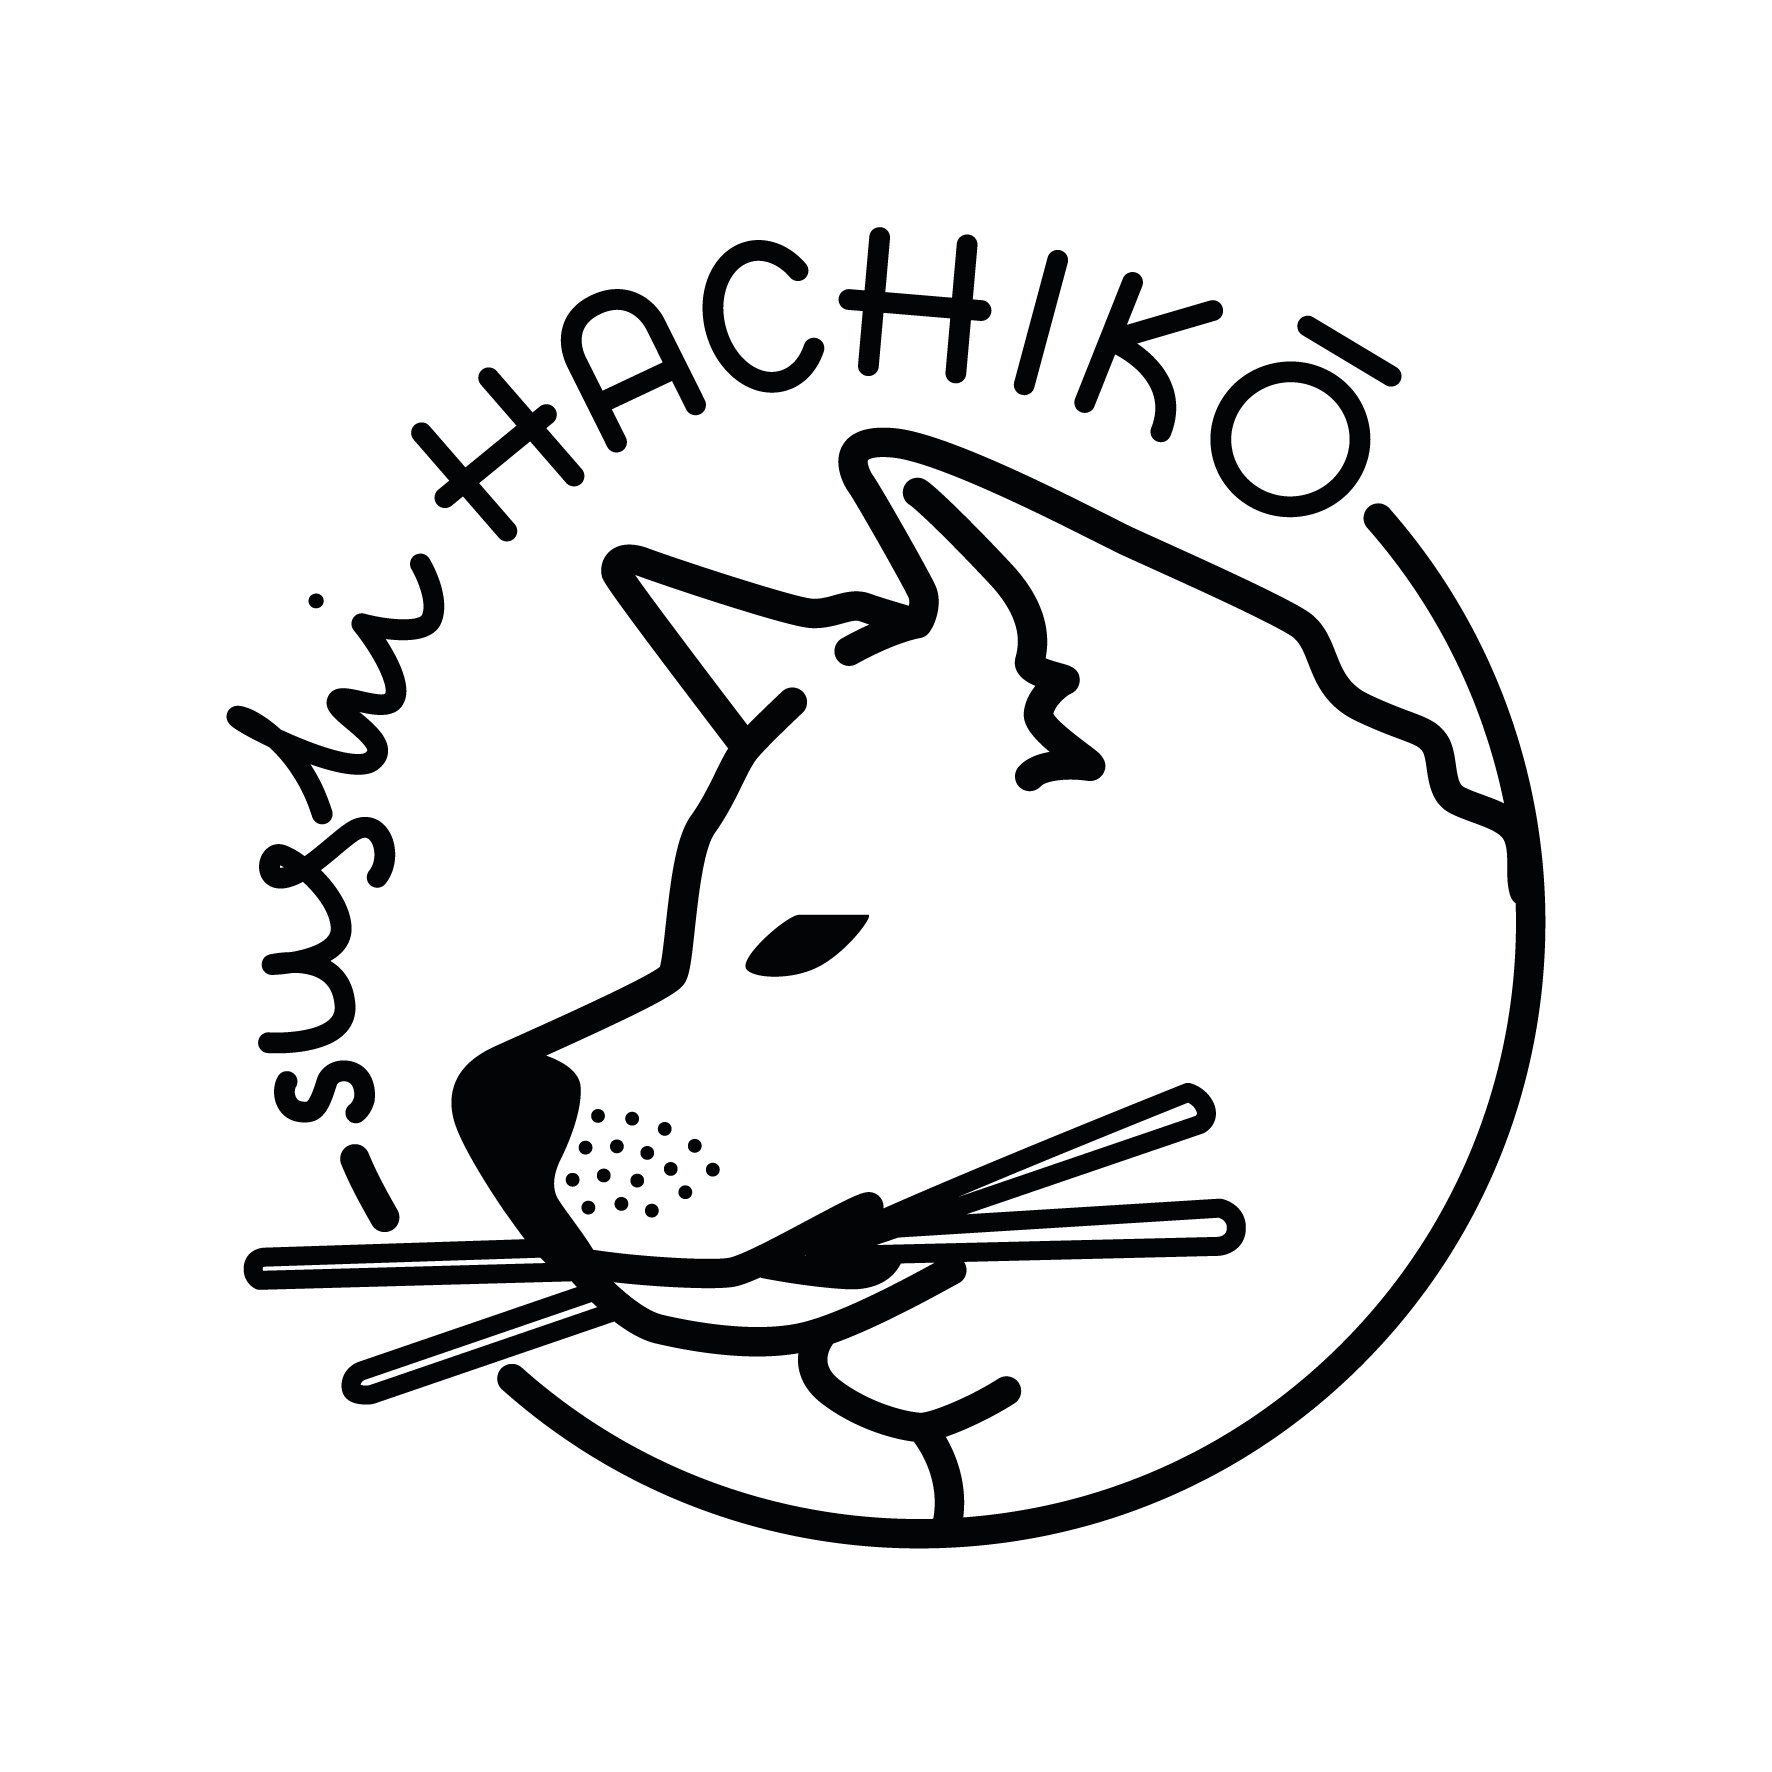 Sushi Hachiko